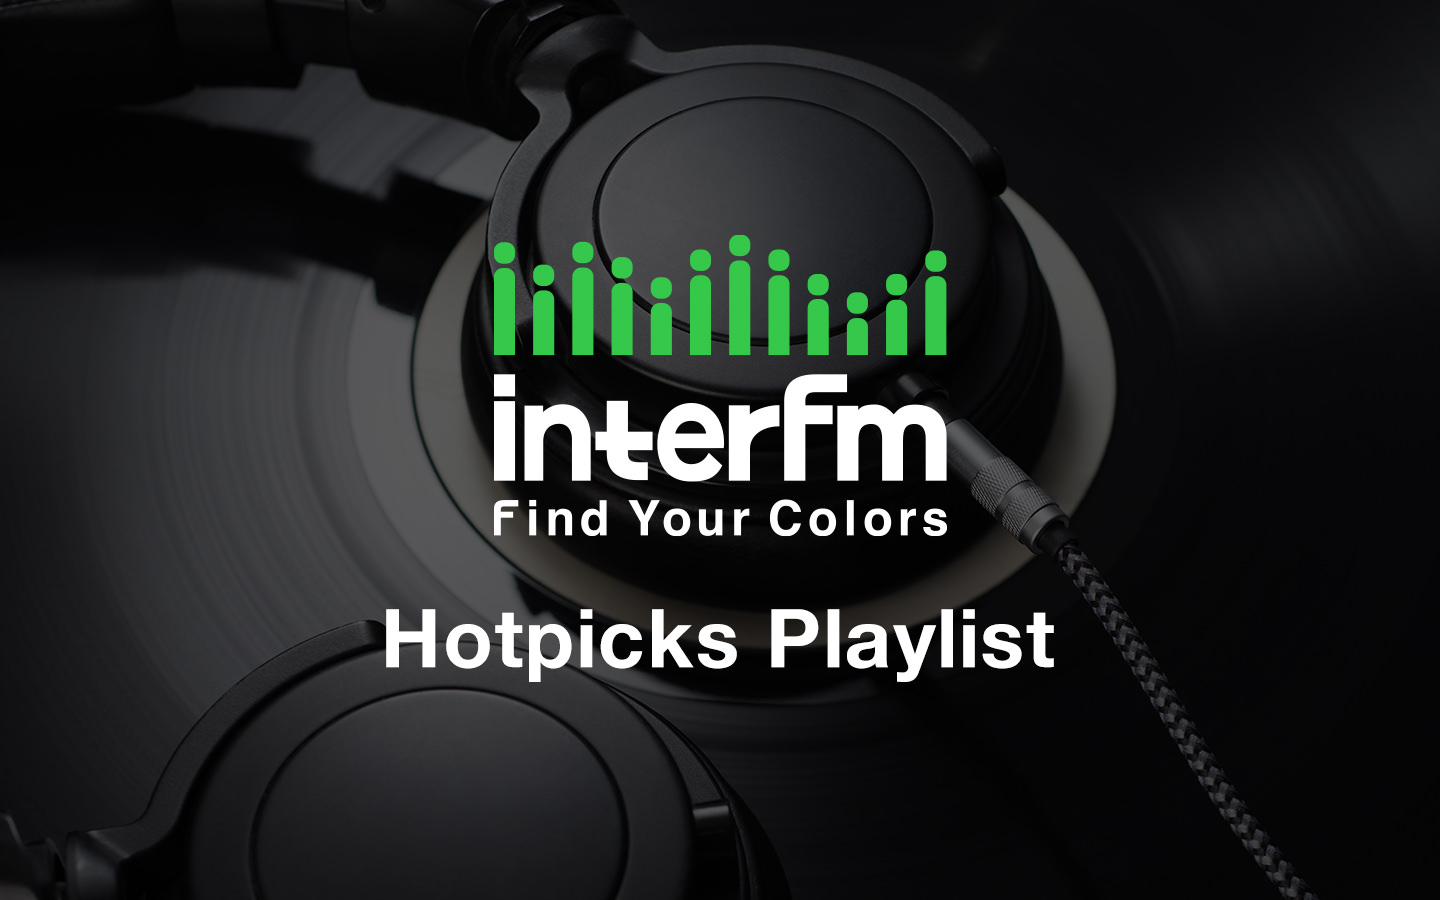 interfm Hotpicks Playlist